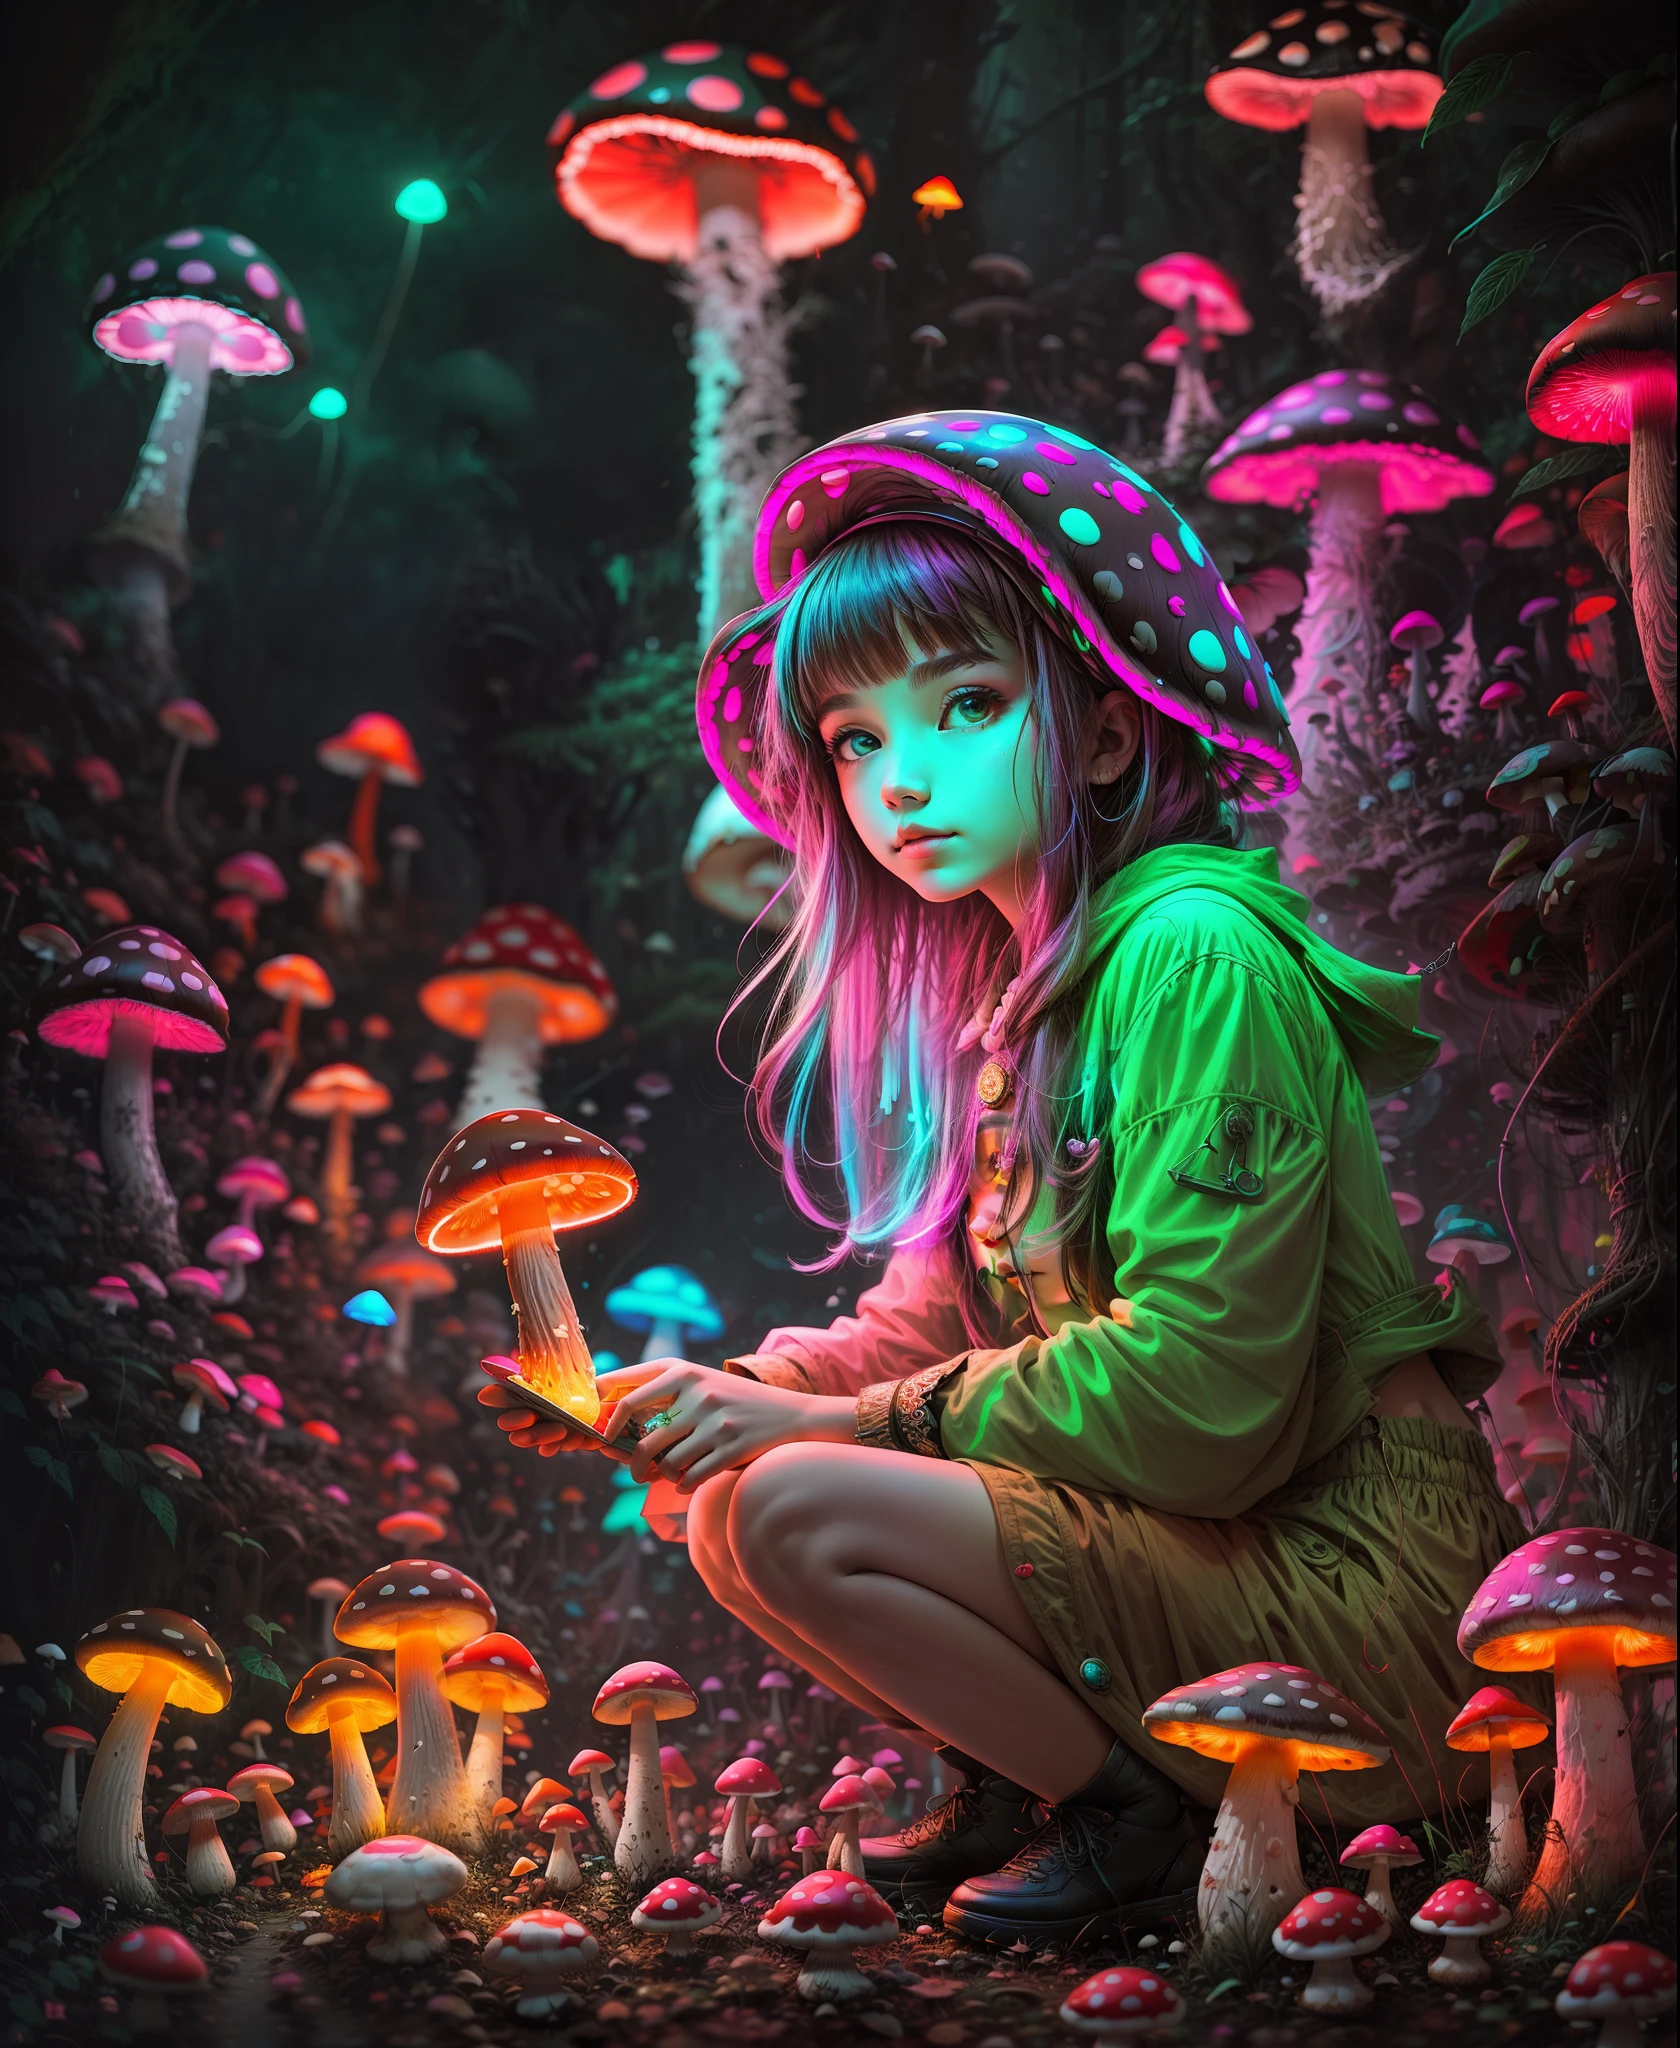 1girl and many neon mushrooms,shroom